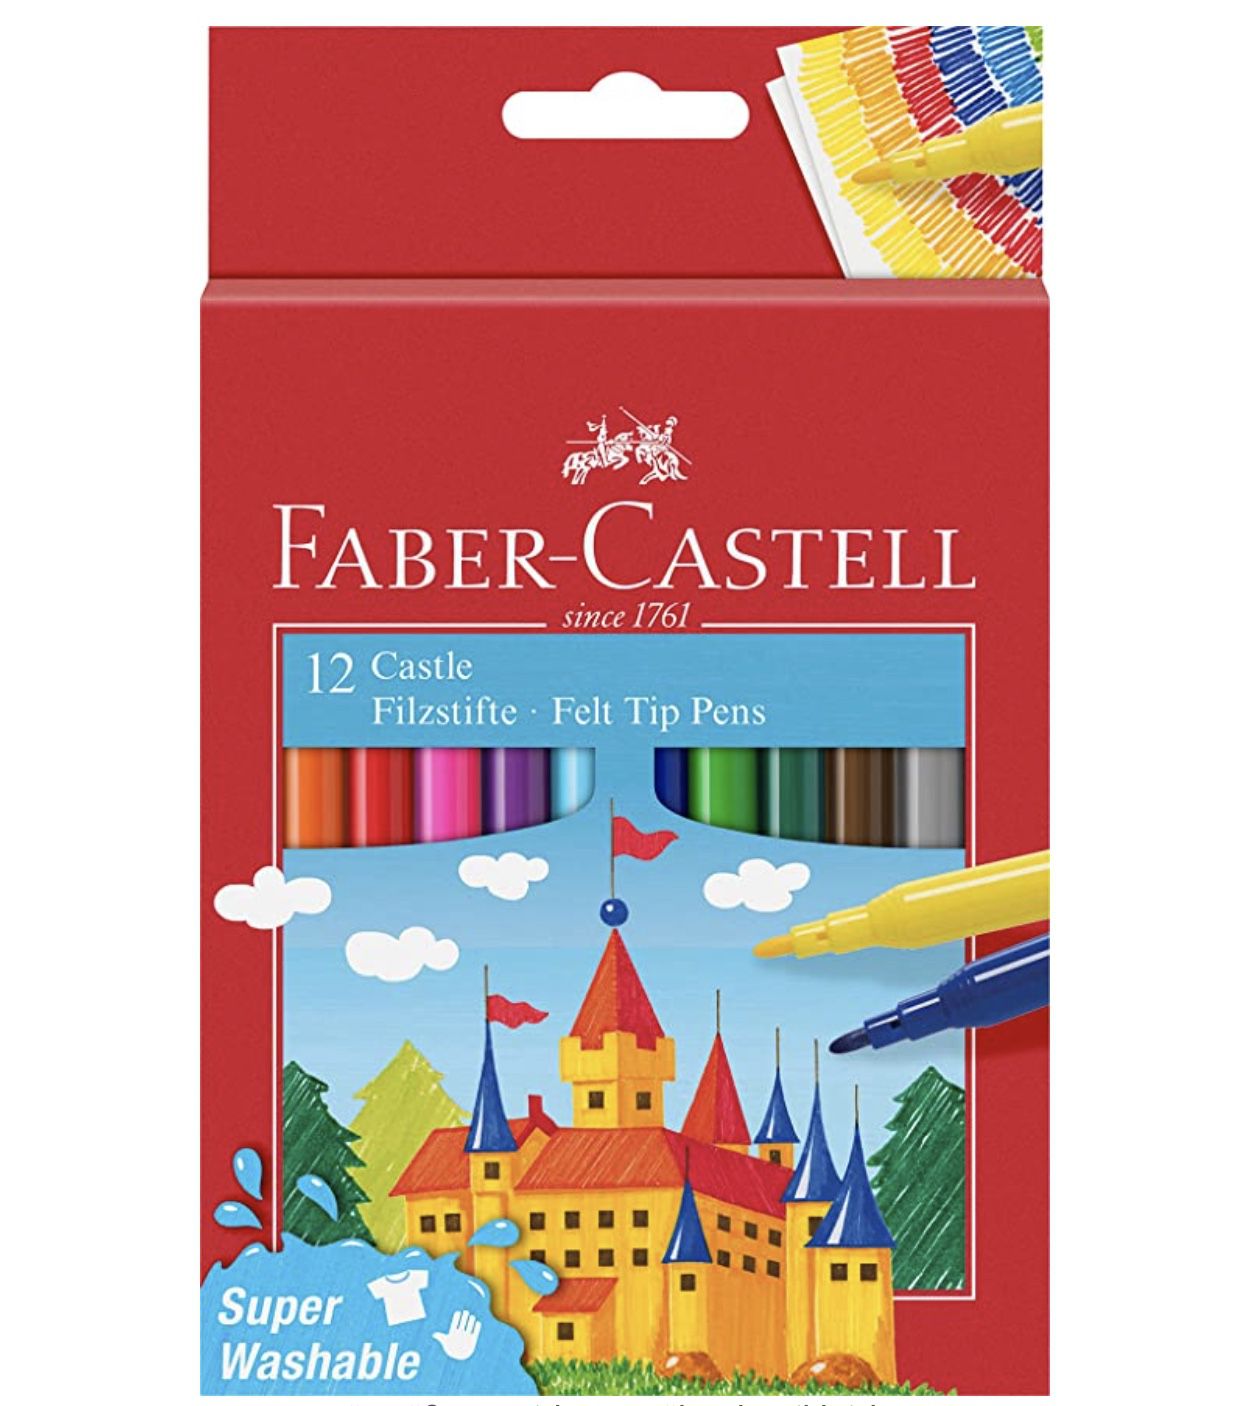 4x 12er Pack Faber Castell Filzstifte Castle für 5,36€ (statt 9€)   Prime